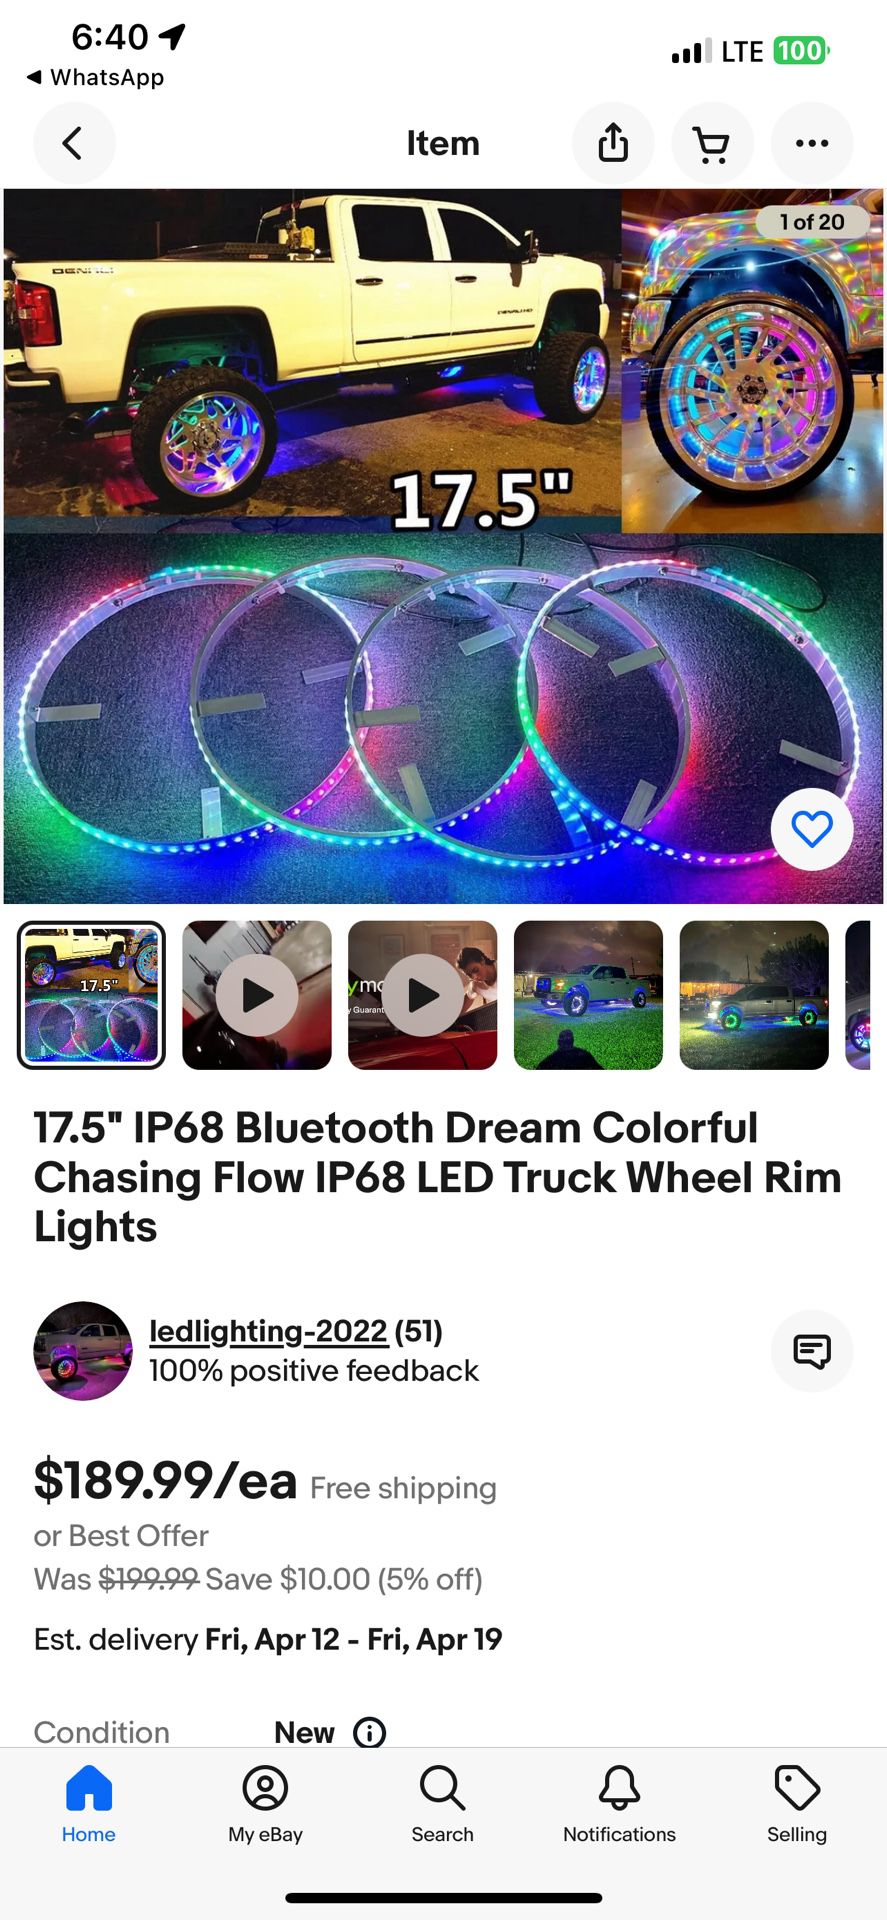 17.5" IP68 Bluetooth Dream Colorful Chasing Flow IP68 LED Truck Wheel Rim Lights